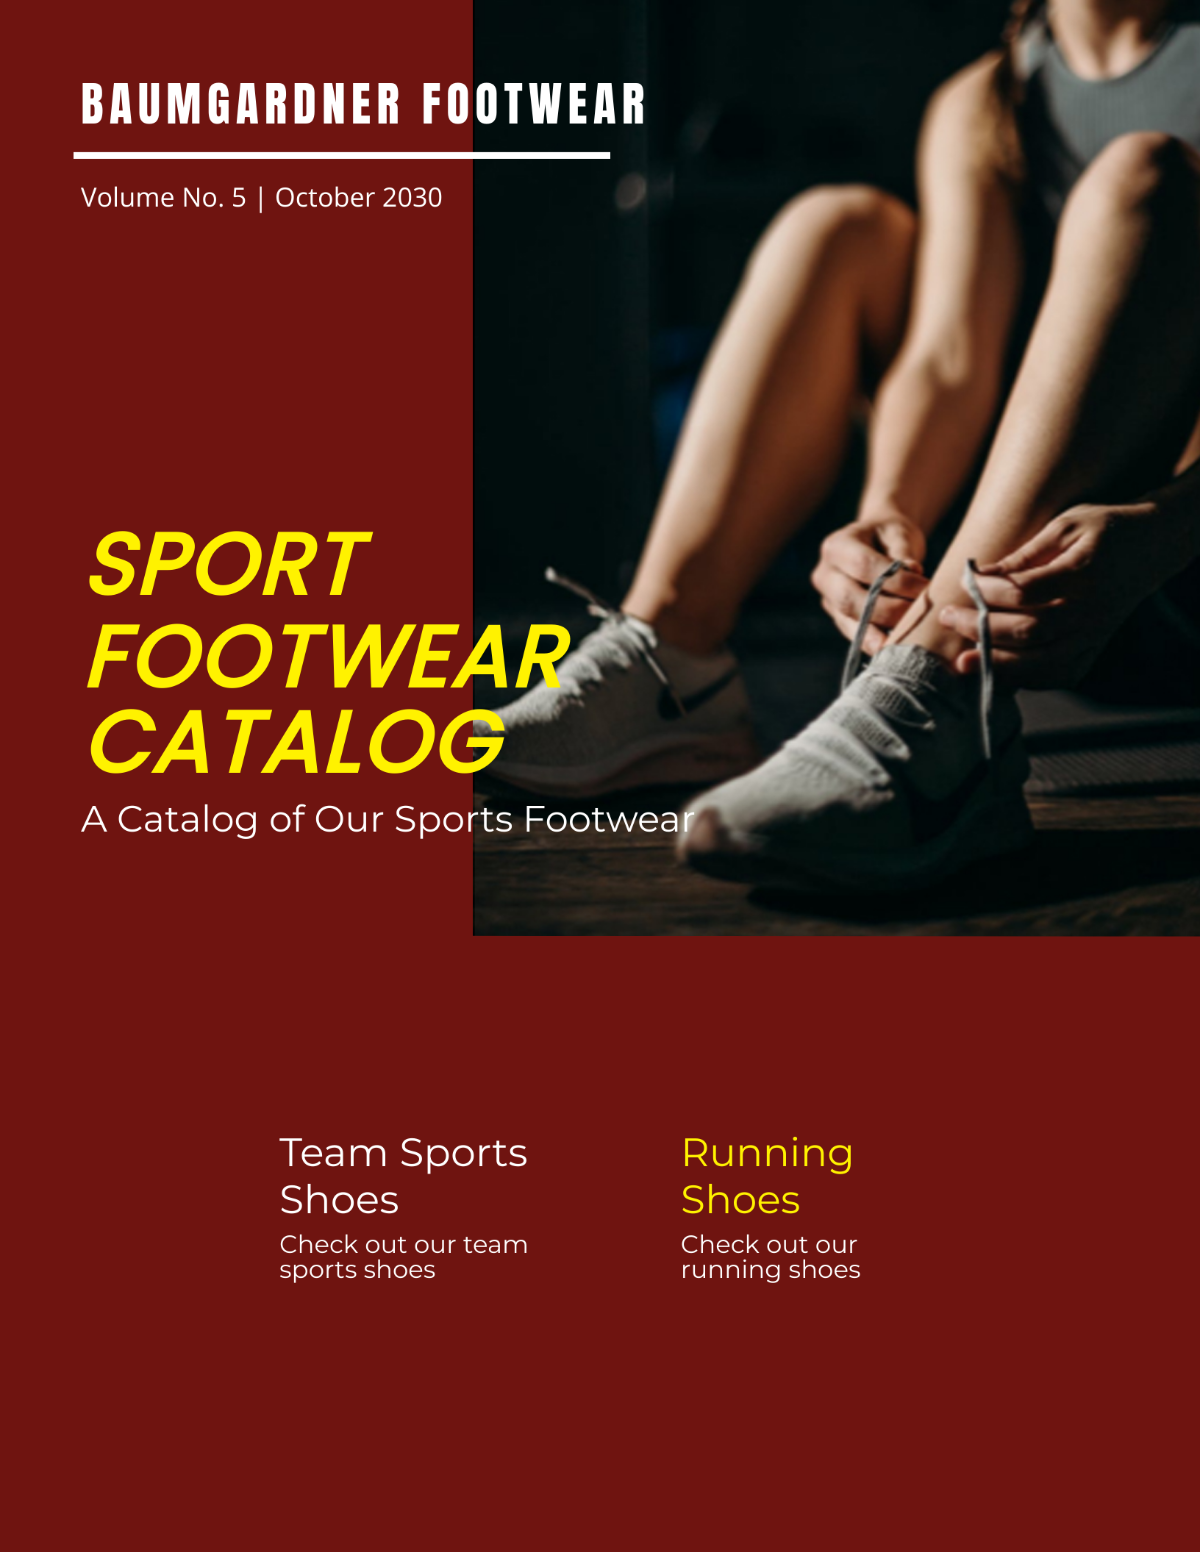 Sports Footwear Catalog Template